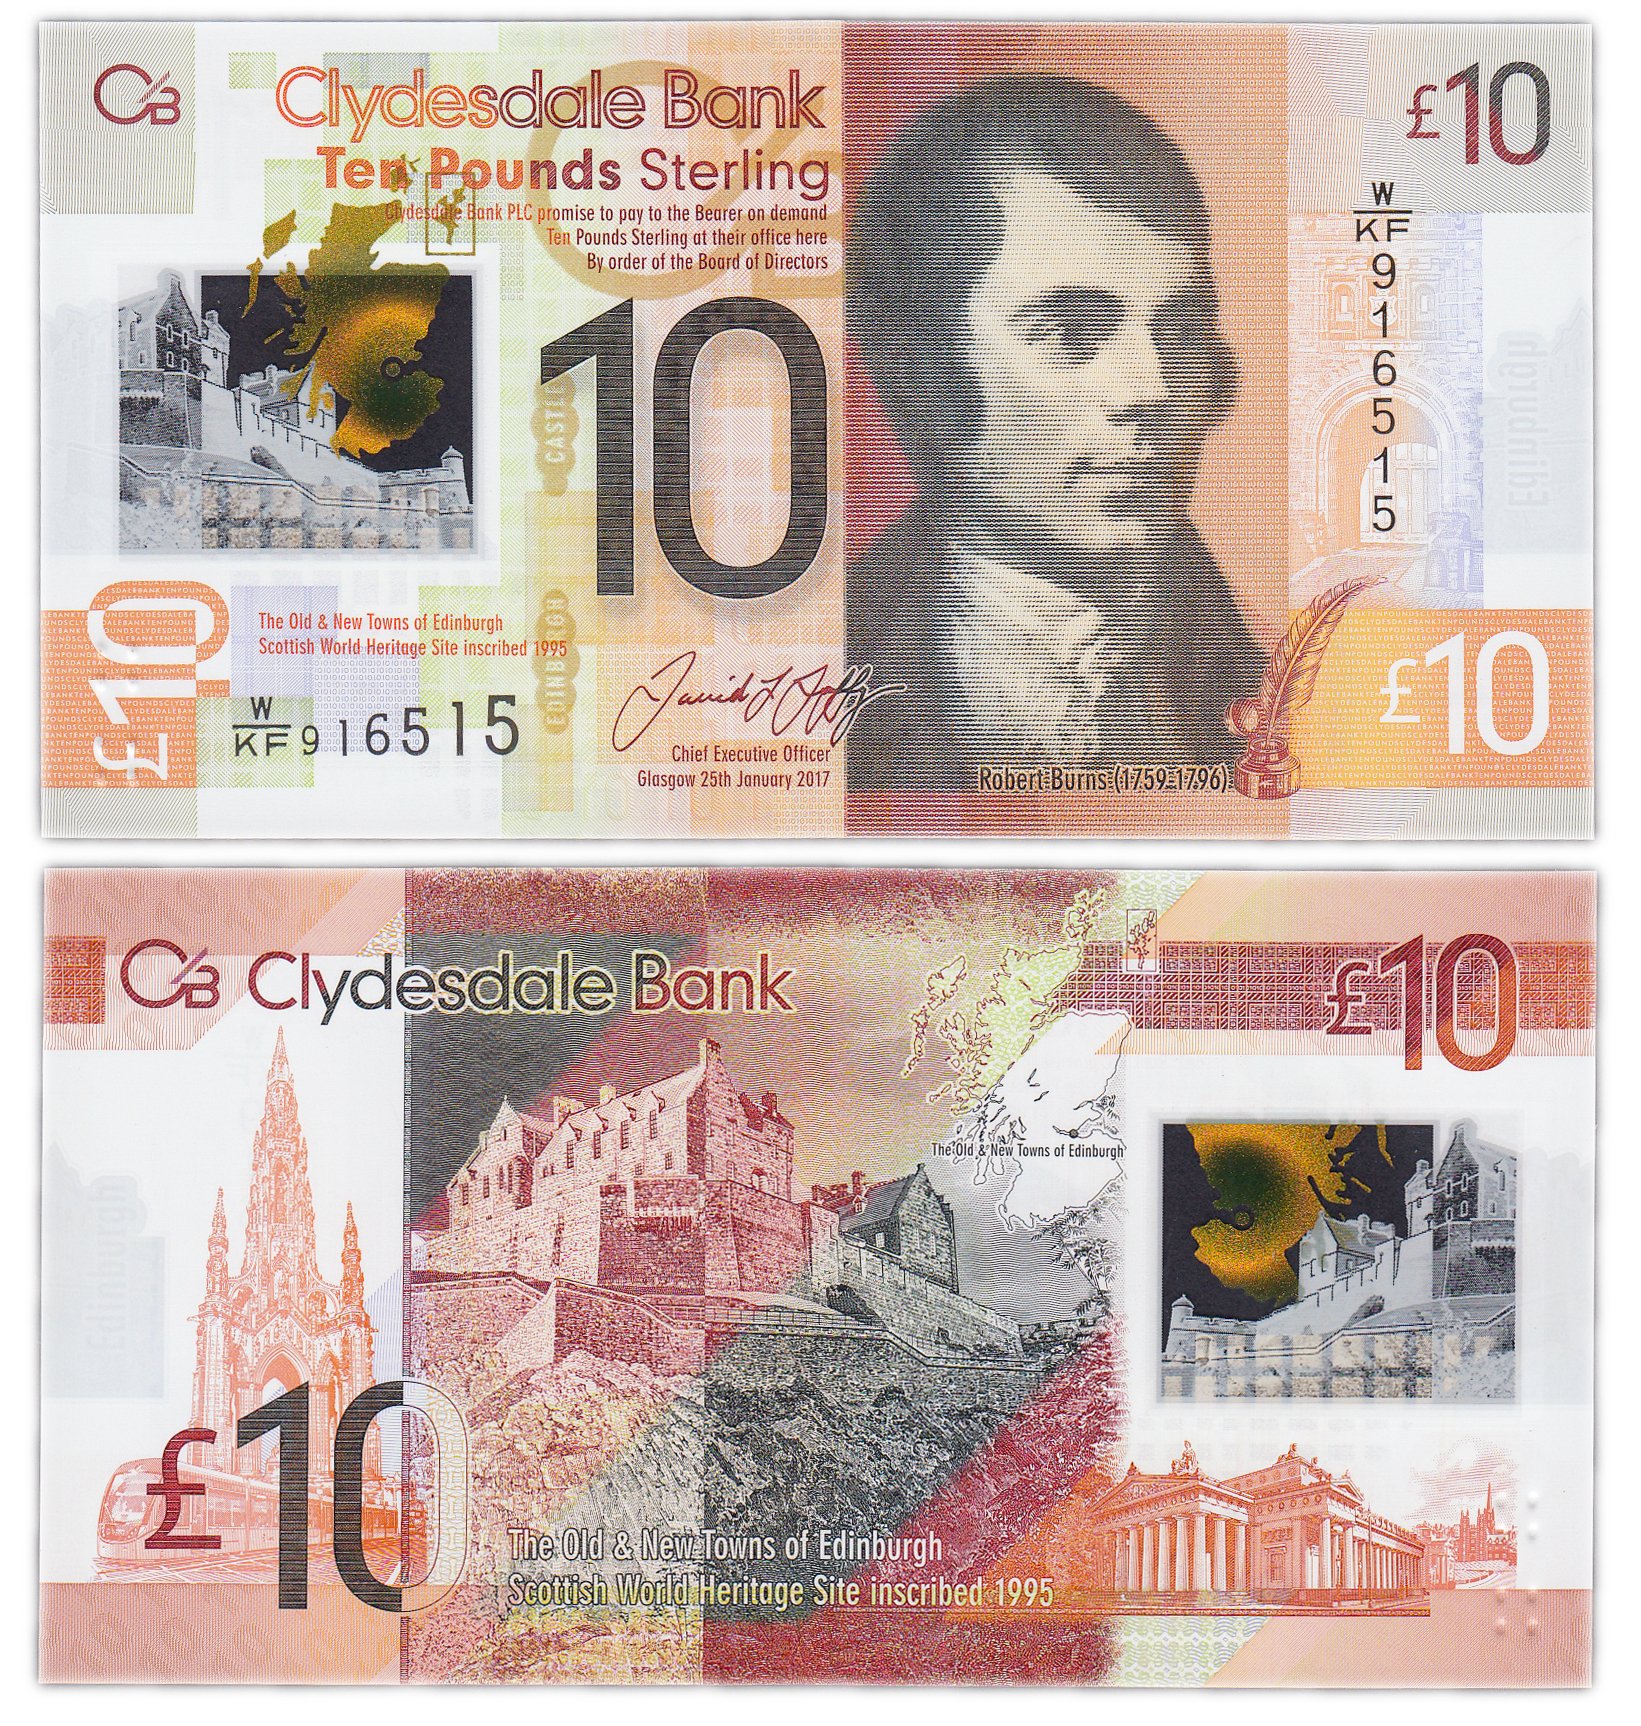 Миллион фунтов стерлингов в рублях на сегодня. Фунт стерлингов купюра в 10 фунтов. Банкноты Шотландия 10 фунтов. 10 Фунтов стерлингов купюра Шотландии. Шотландские фунты банкноты.